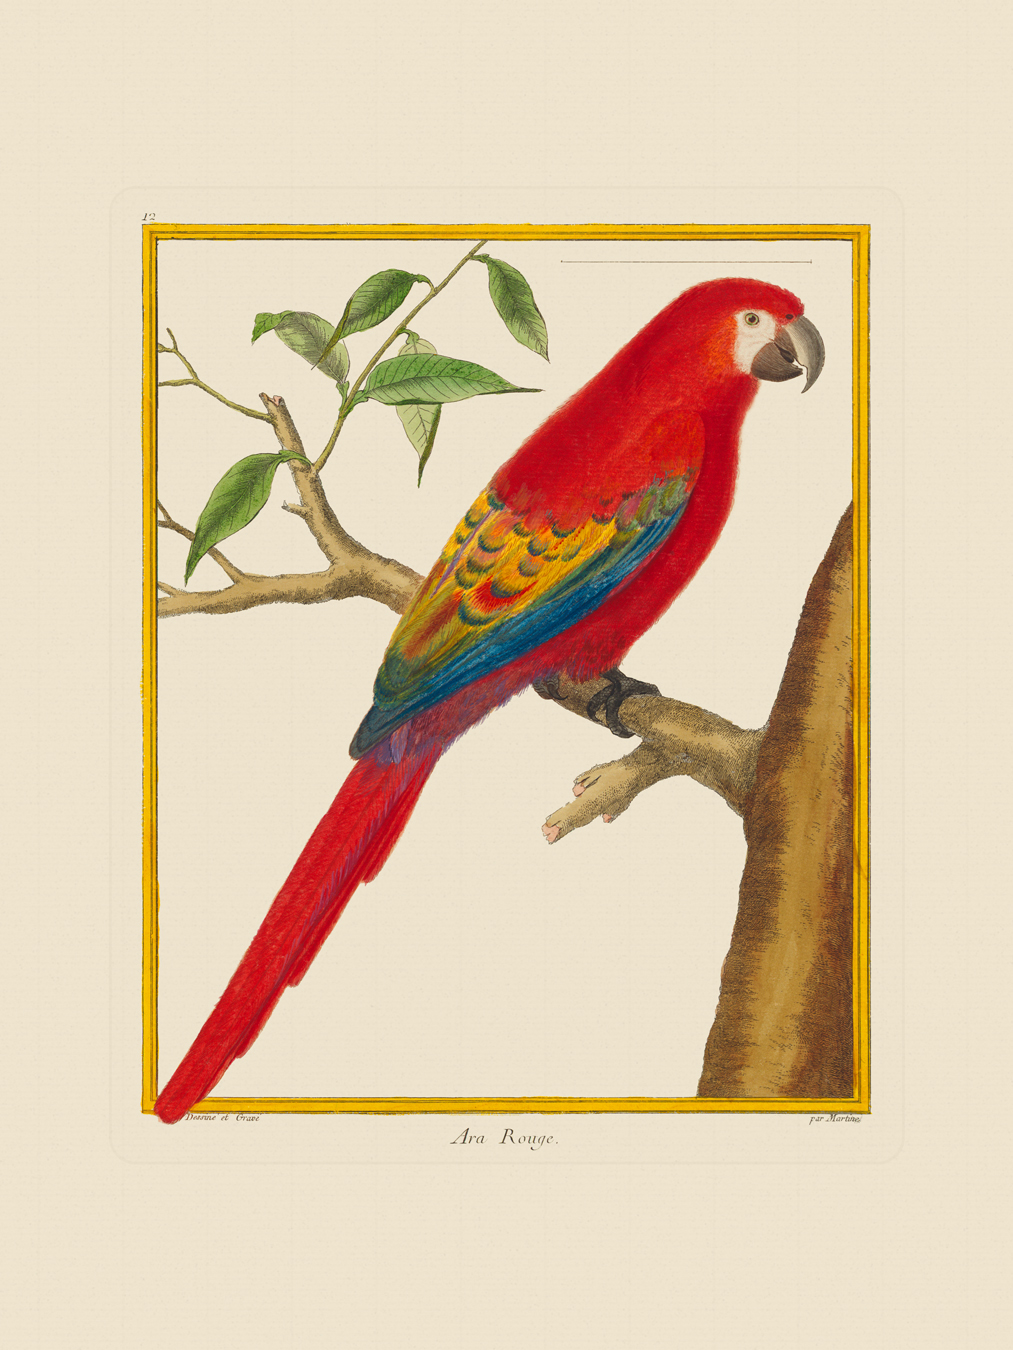 François Nicolas Martinet - Woodpecker Pictachete: An 18th